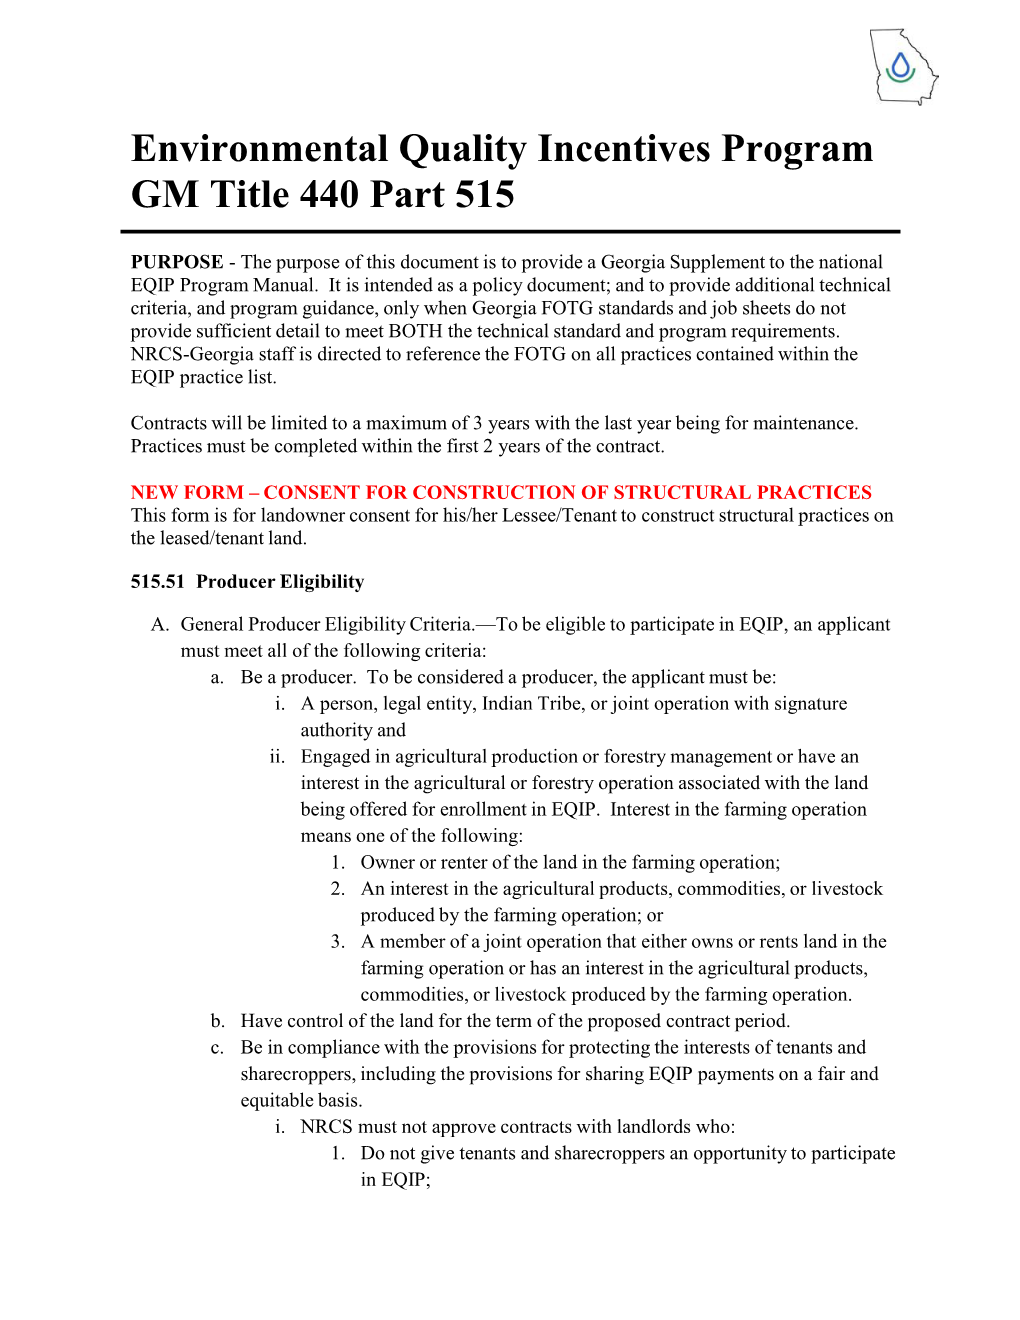 Environmental Quality Incentives Program GM Title 440 Part 515